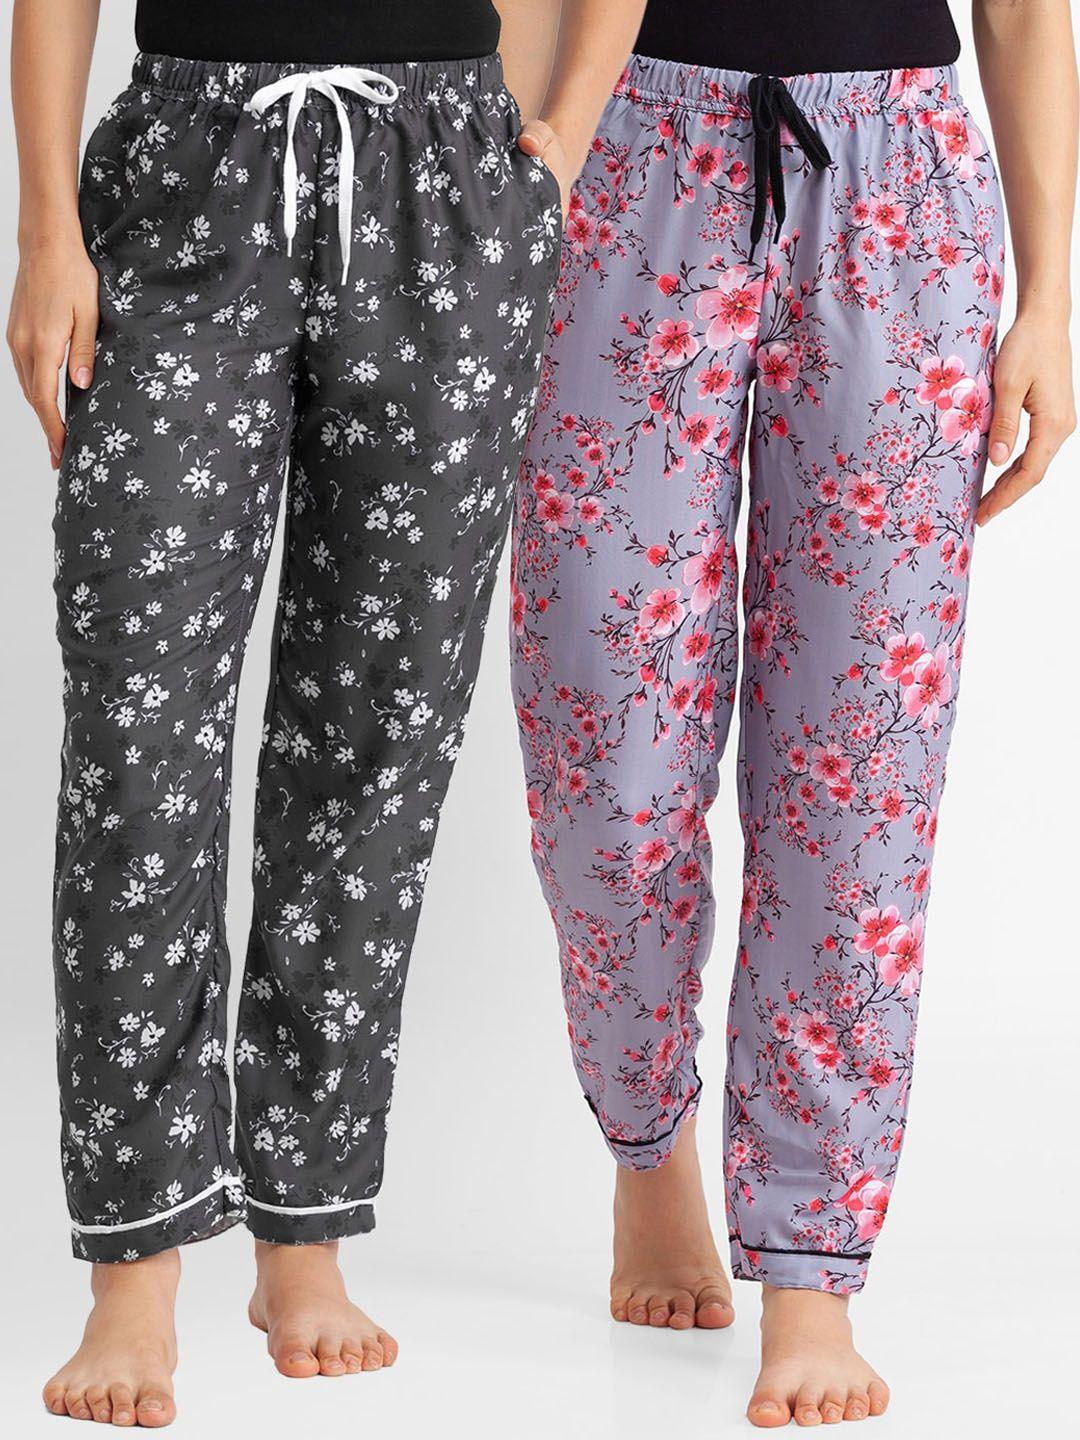 fashionrack-women-set-of-2-grey-and-charcoal-floral-printed-cotton-pajamas